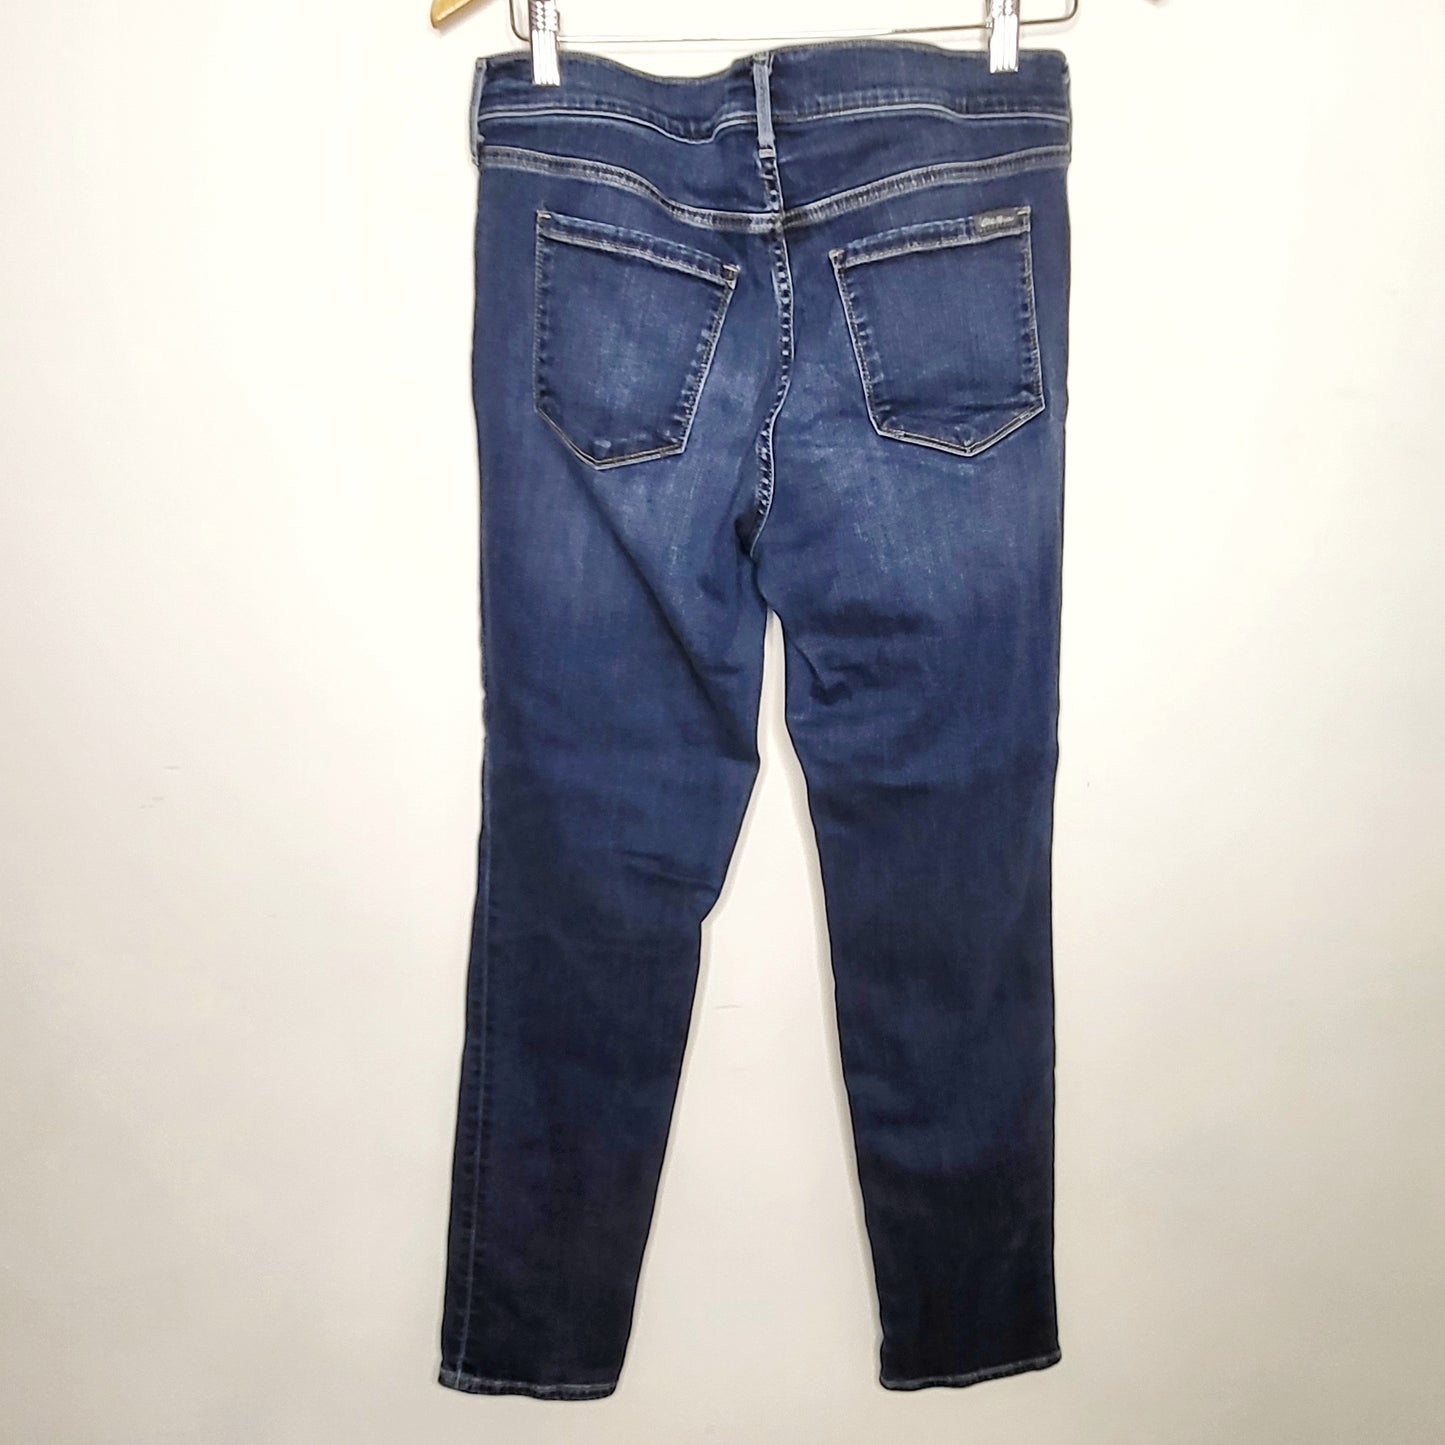 JBAB2 - Eddie Bauer slightly curvy slim straight jeans, size 10, good condition